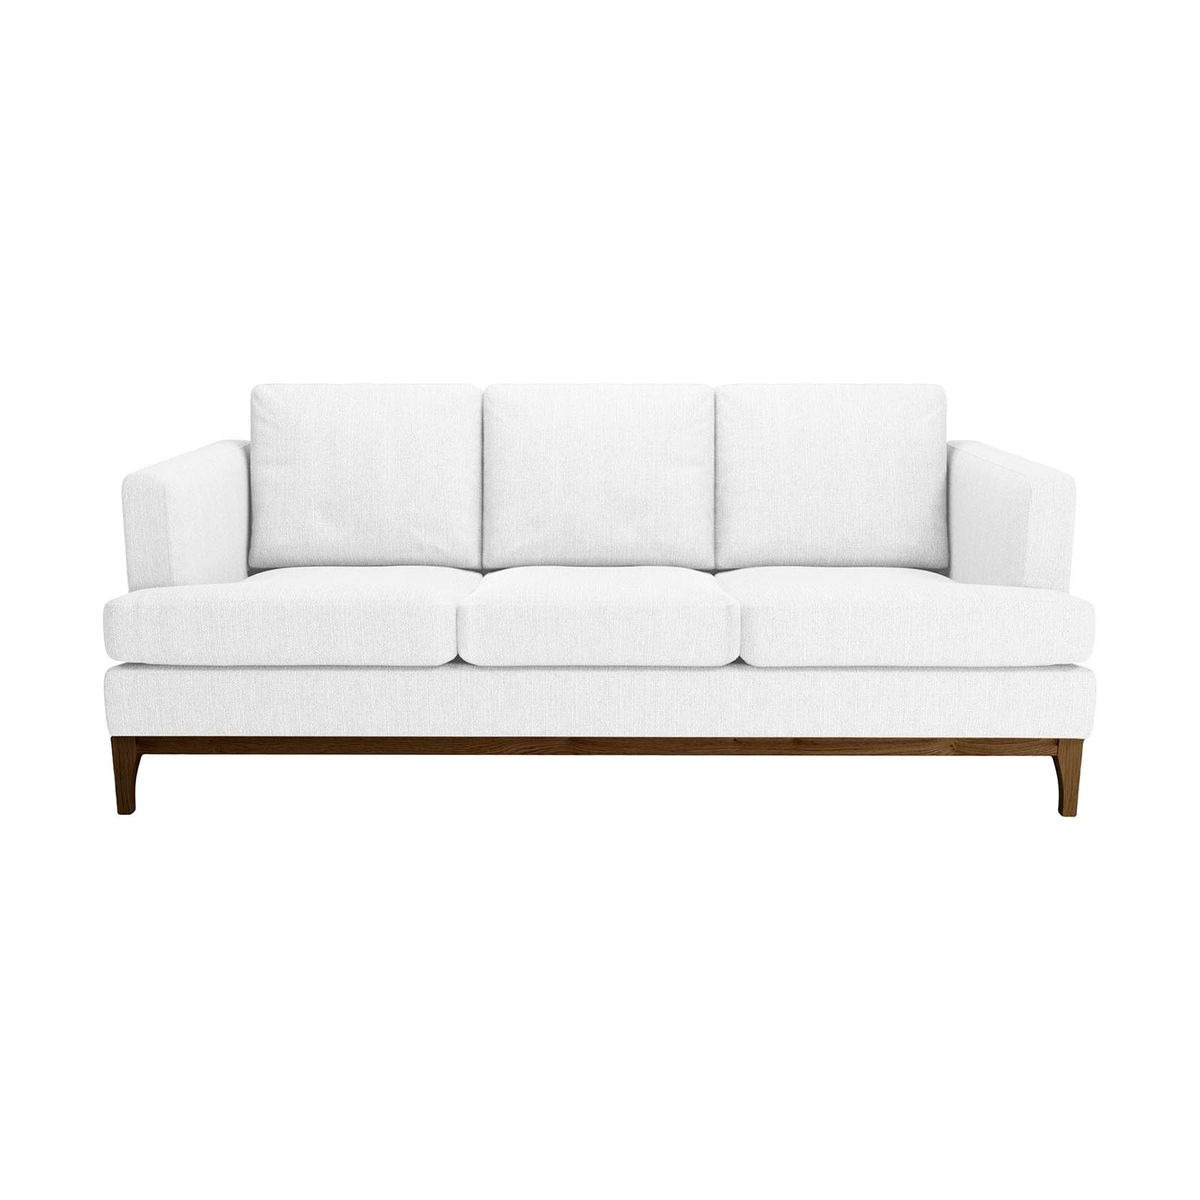 Scarlett Structured 3 Seater Sofa, white, Leg colour: dark oak - image 1